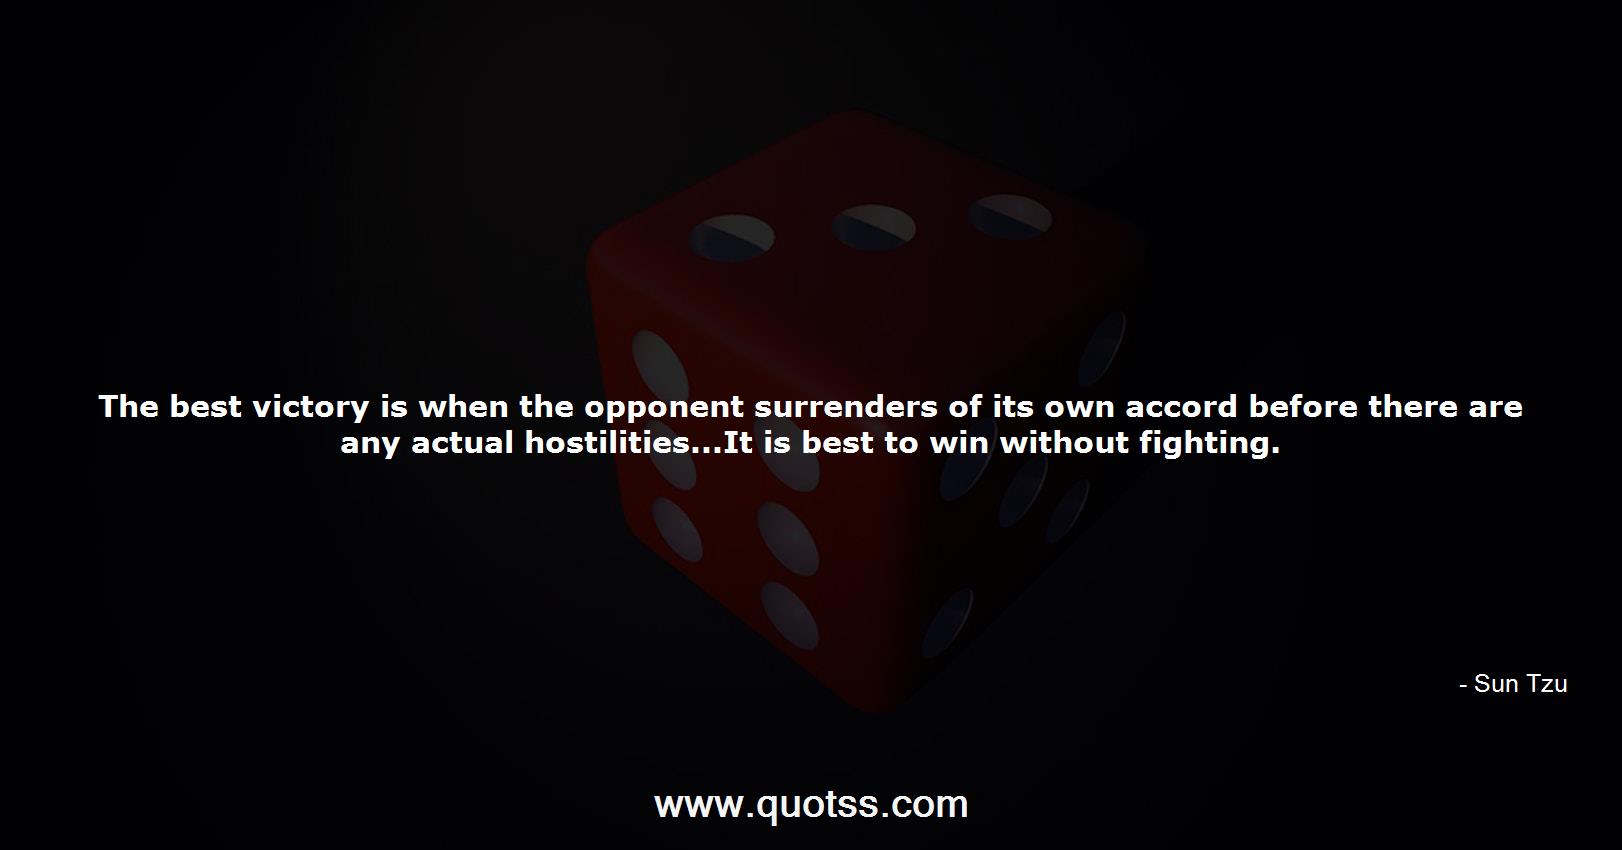 Sun Tzu Quote on Quotss